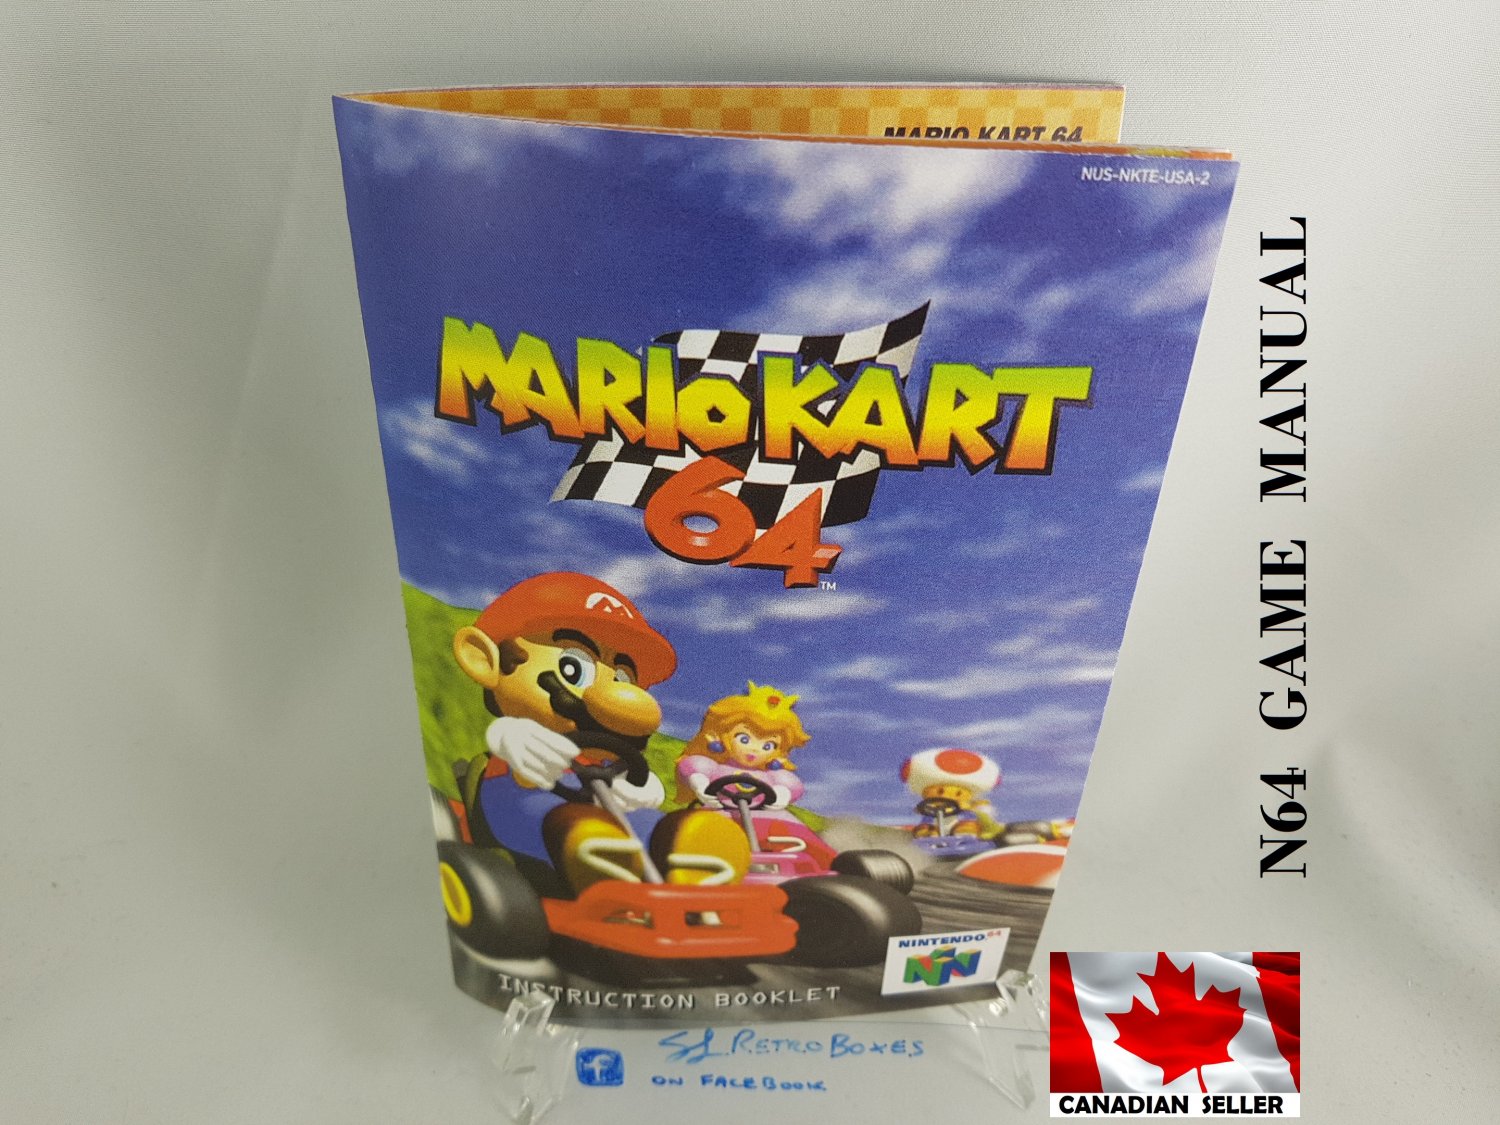 MANUAL N64 - MARIO KART 64 - Nintendo64 Replacement Instruction Manual Booklet